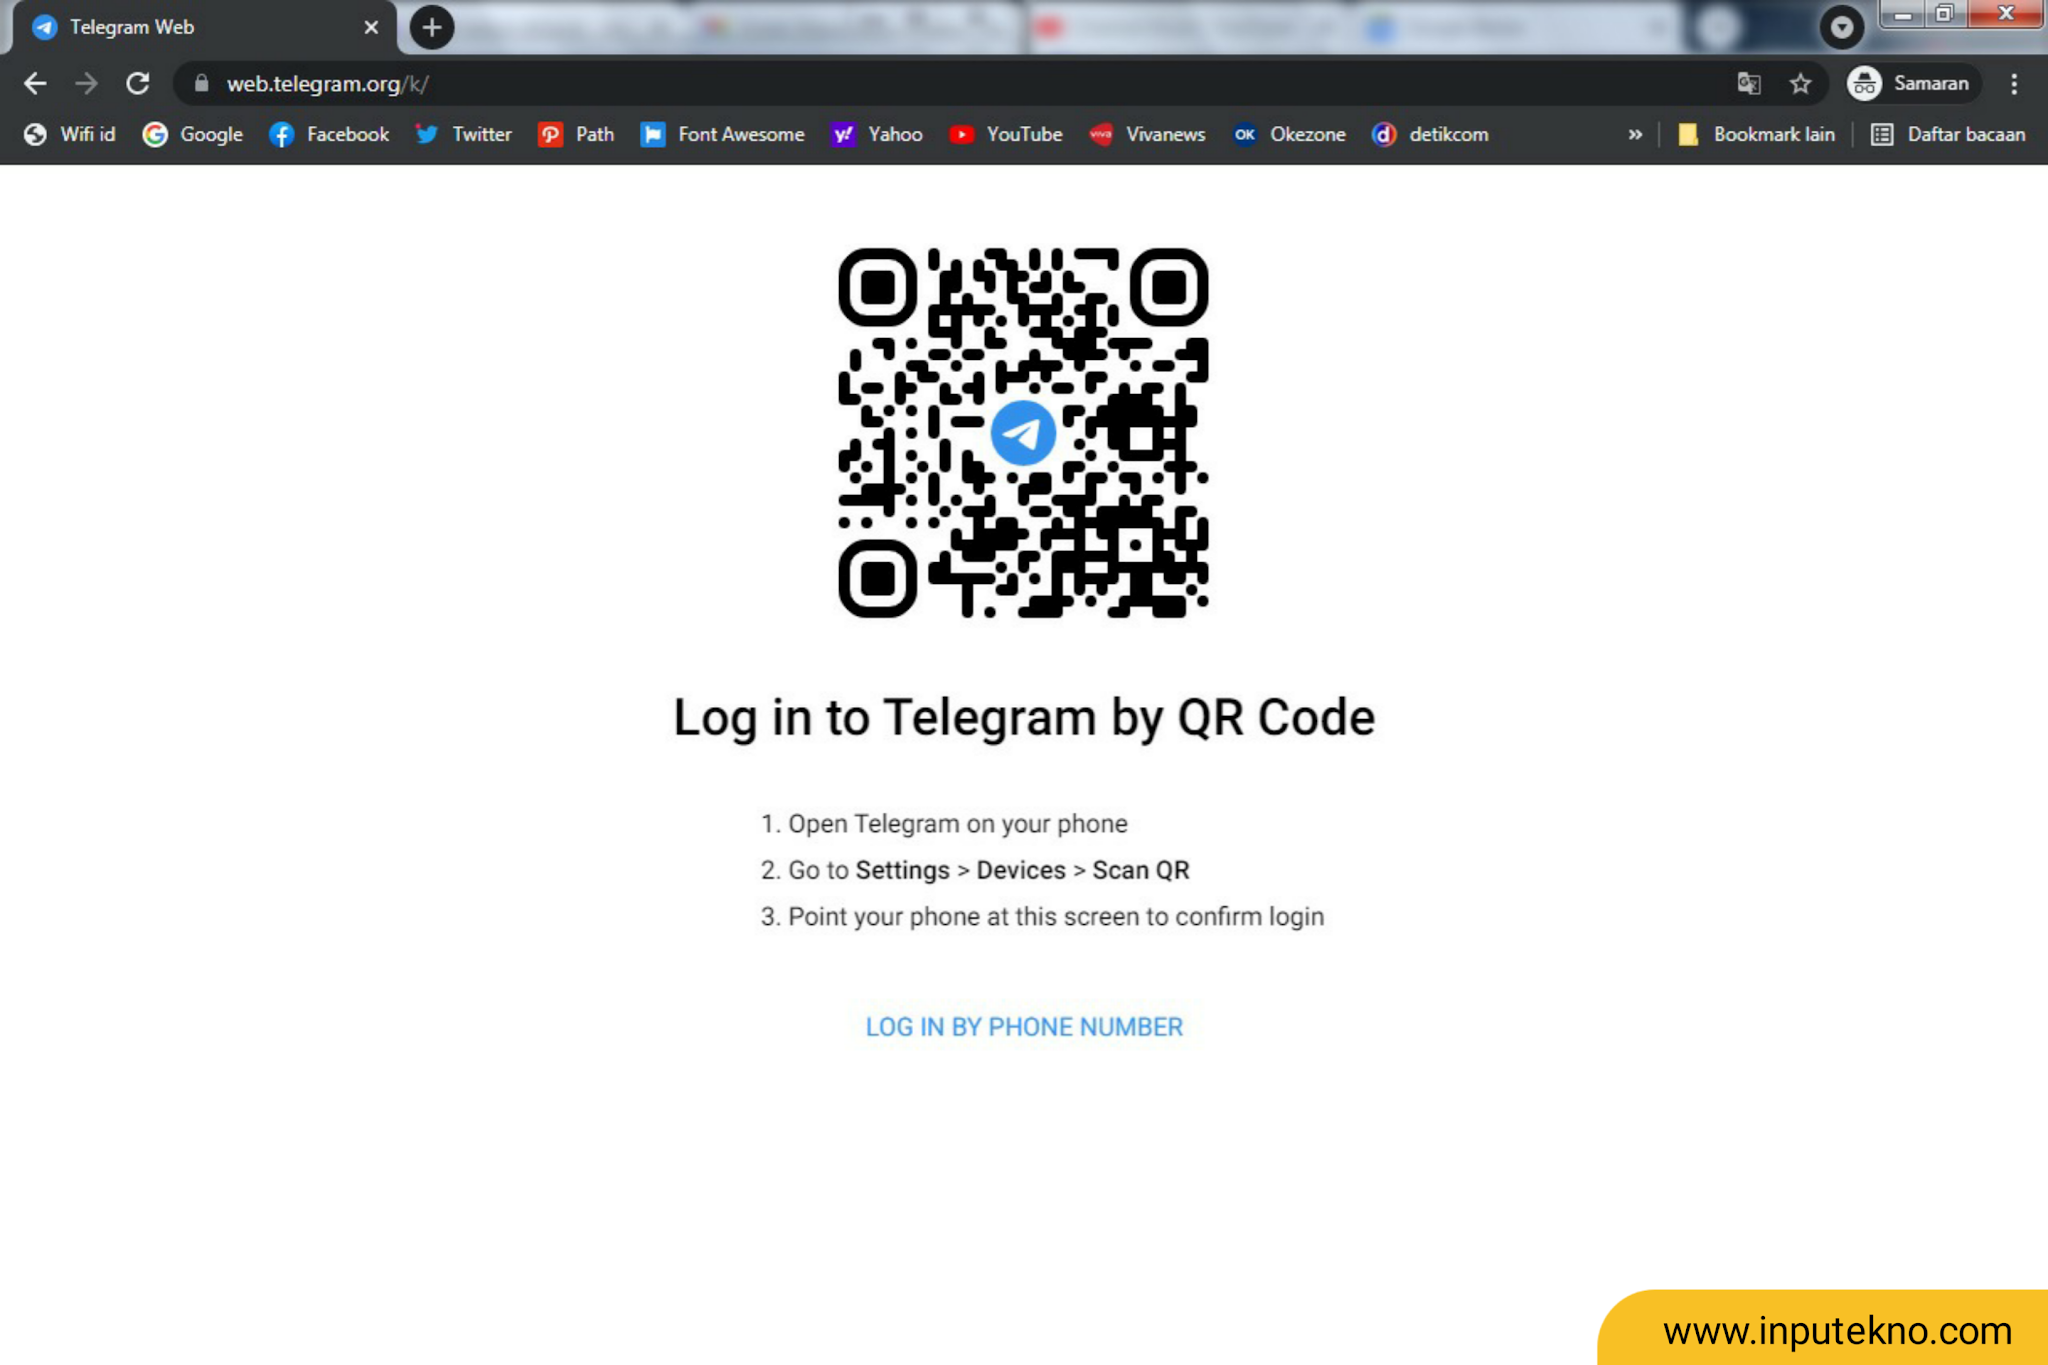 Тг через qr код. QR код телеграм. Web Telegram QR код. Как войти в телеграмм по QR коду. Вход в телеграм по QR коду на компьютере.